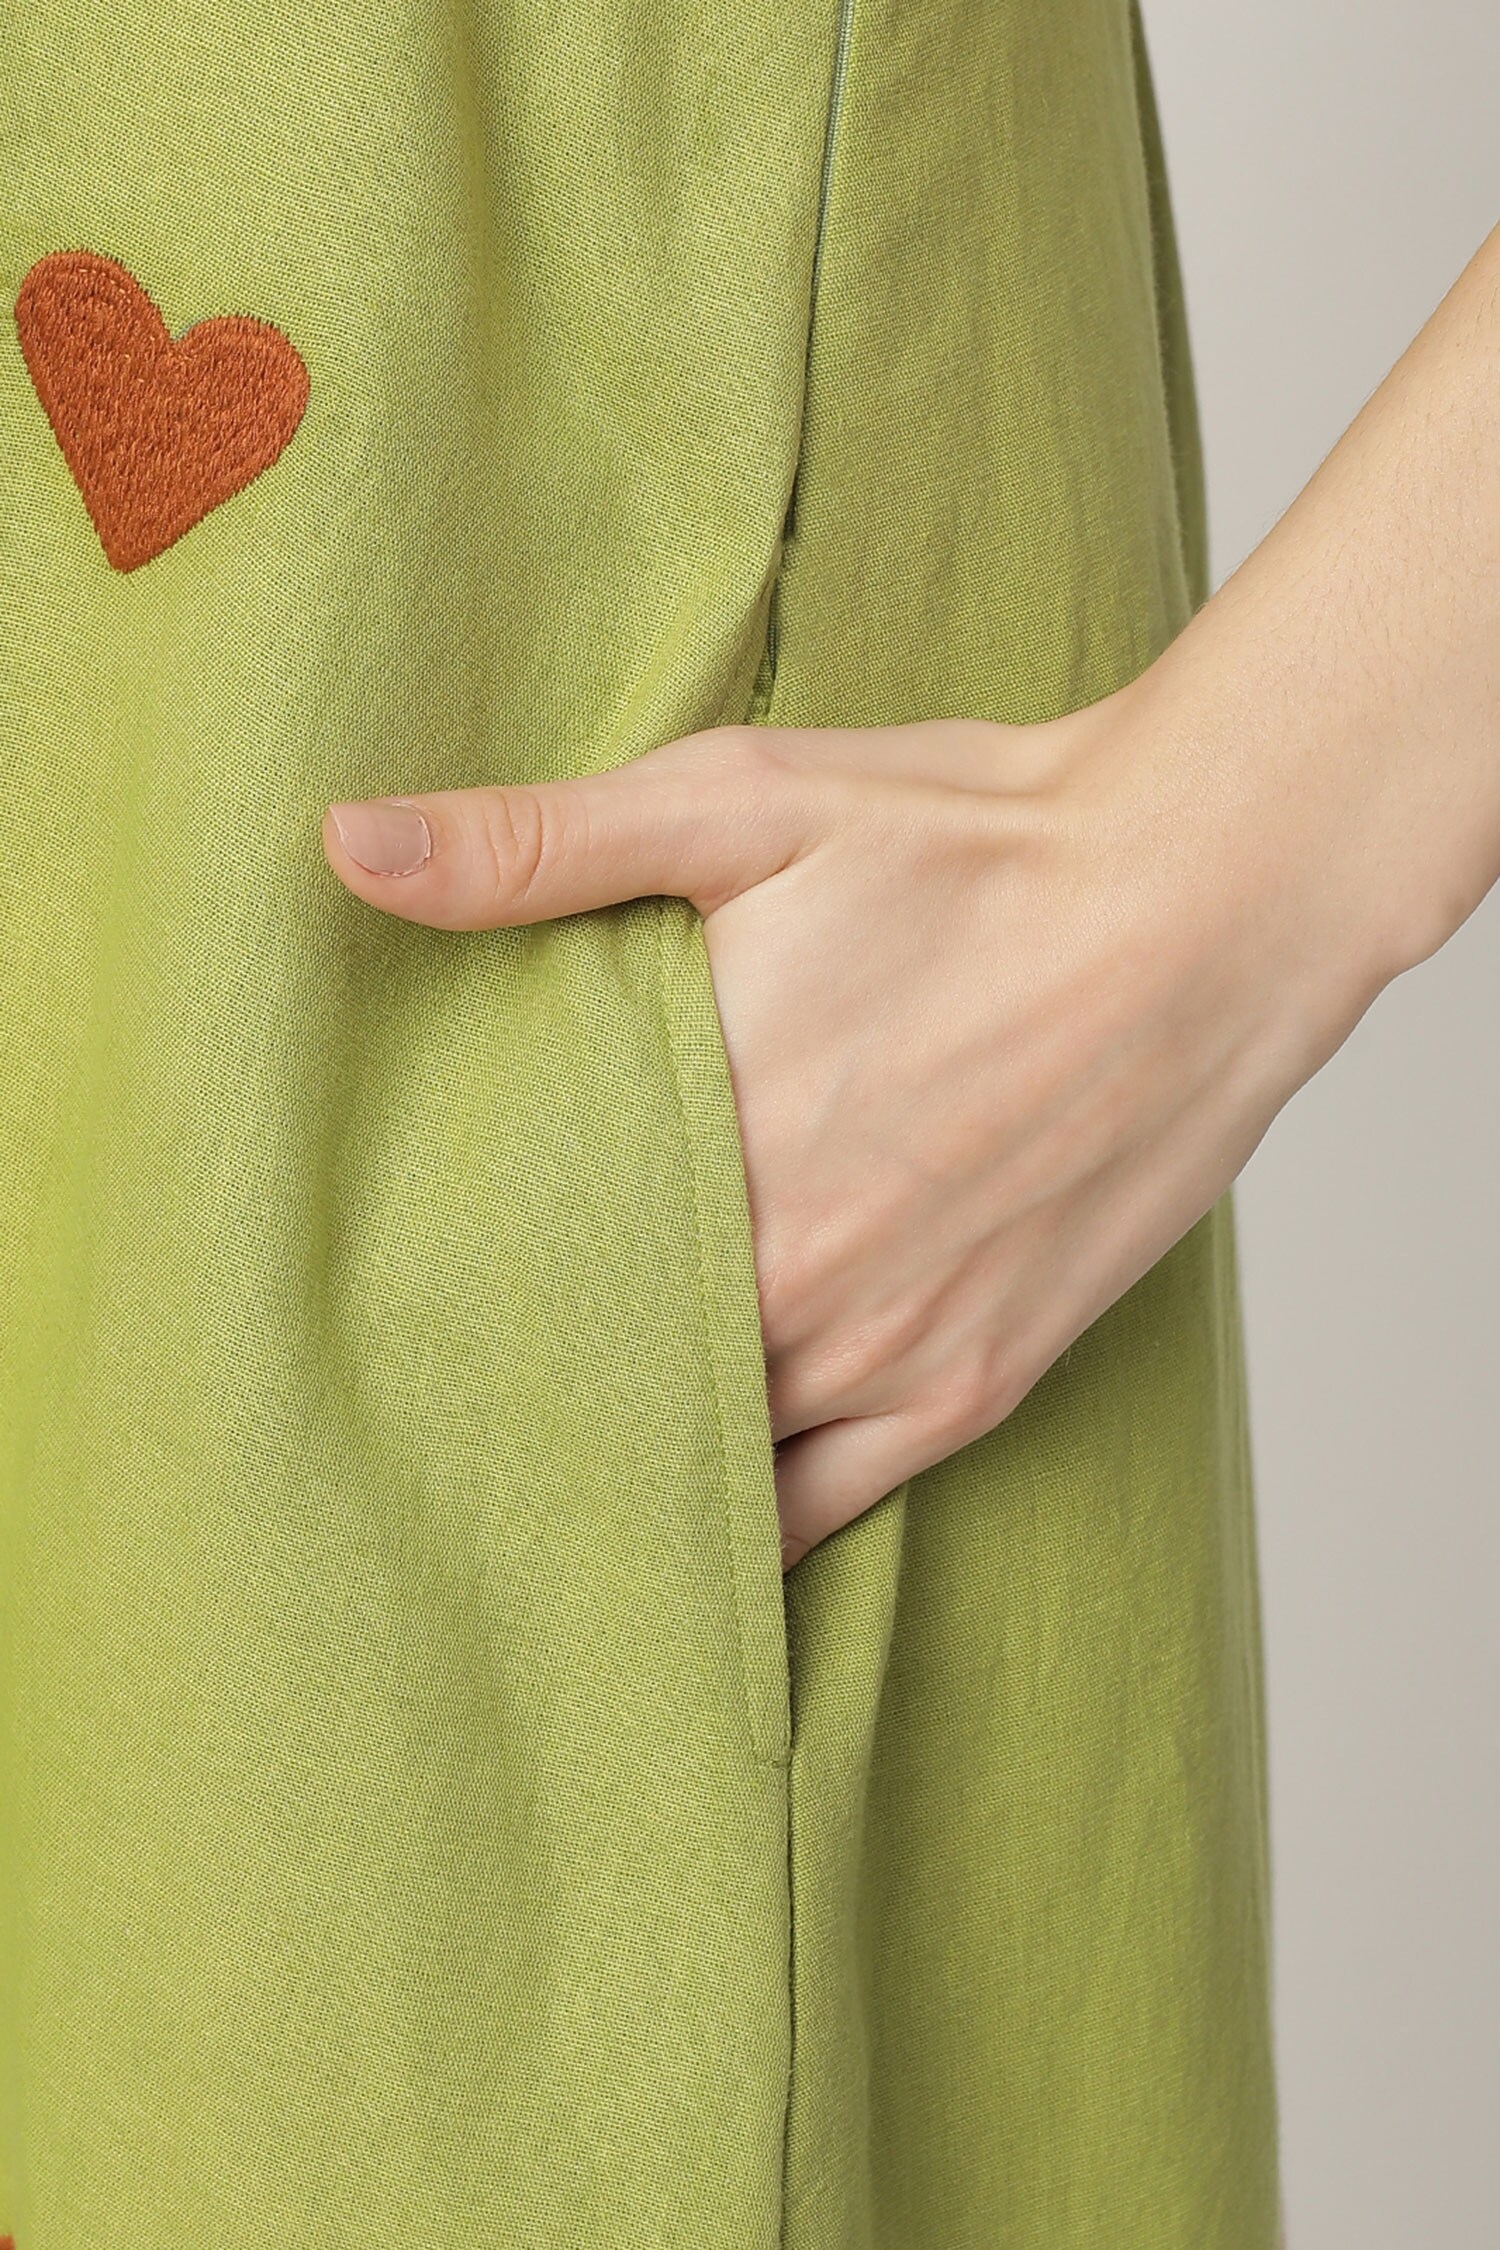 Musal - Green Cotton Linen Embroidery Heart Motifs Round Litzy Midi Dress  For Women